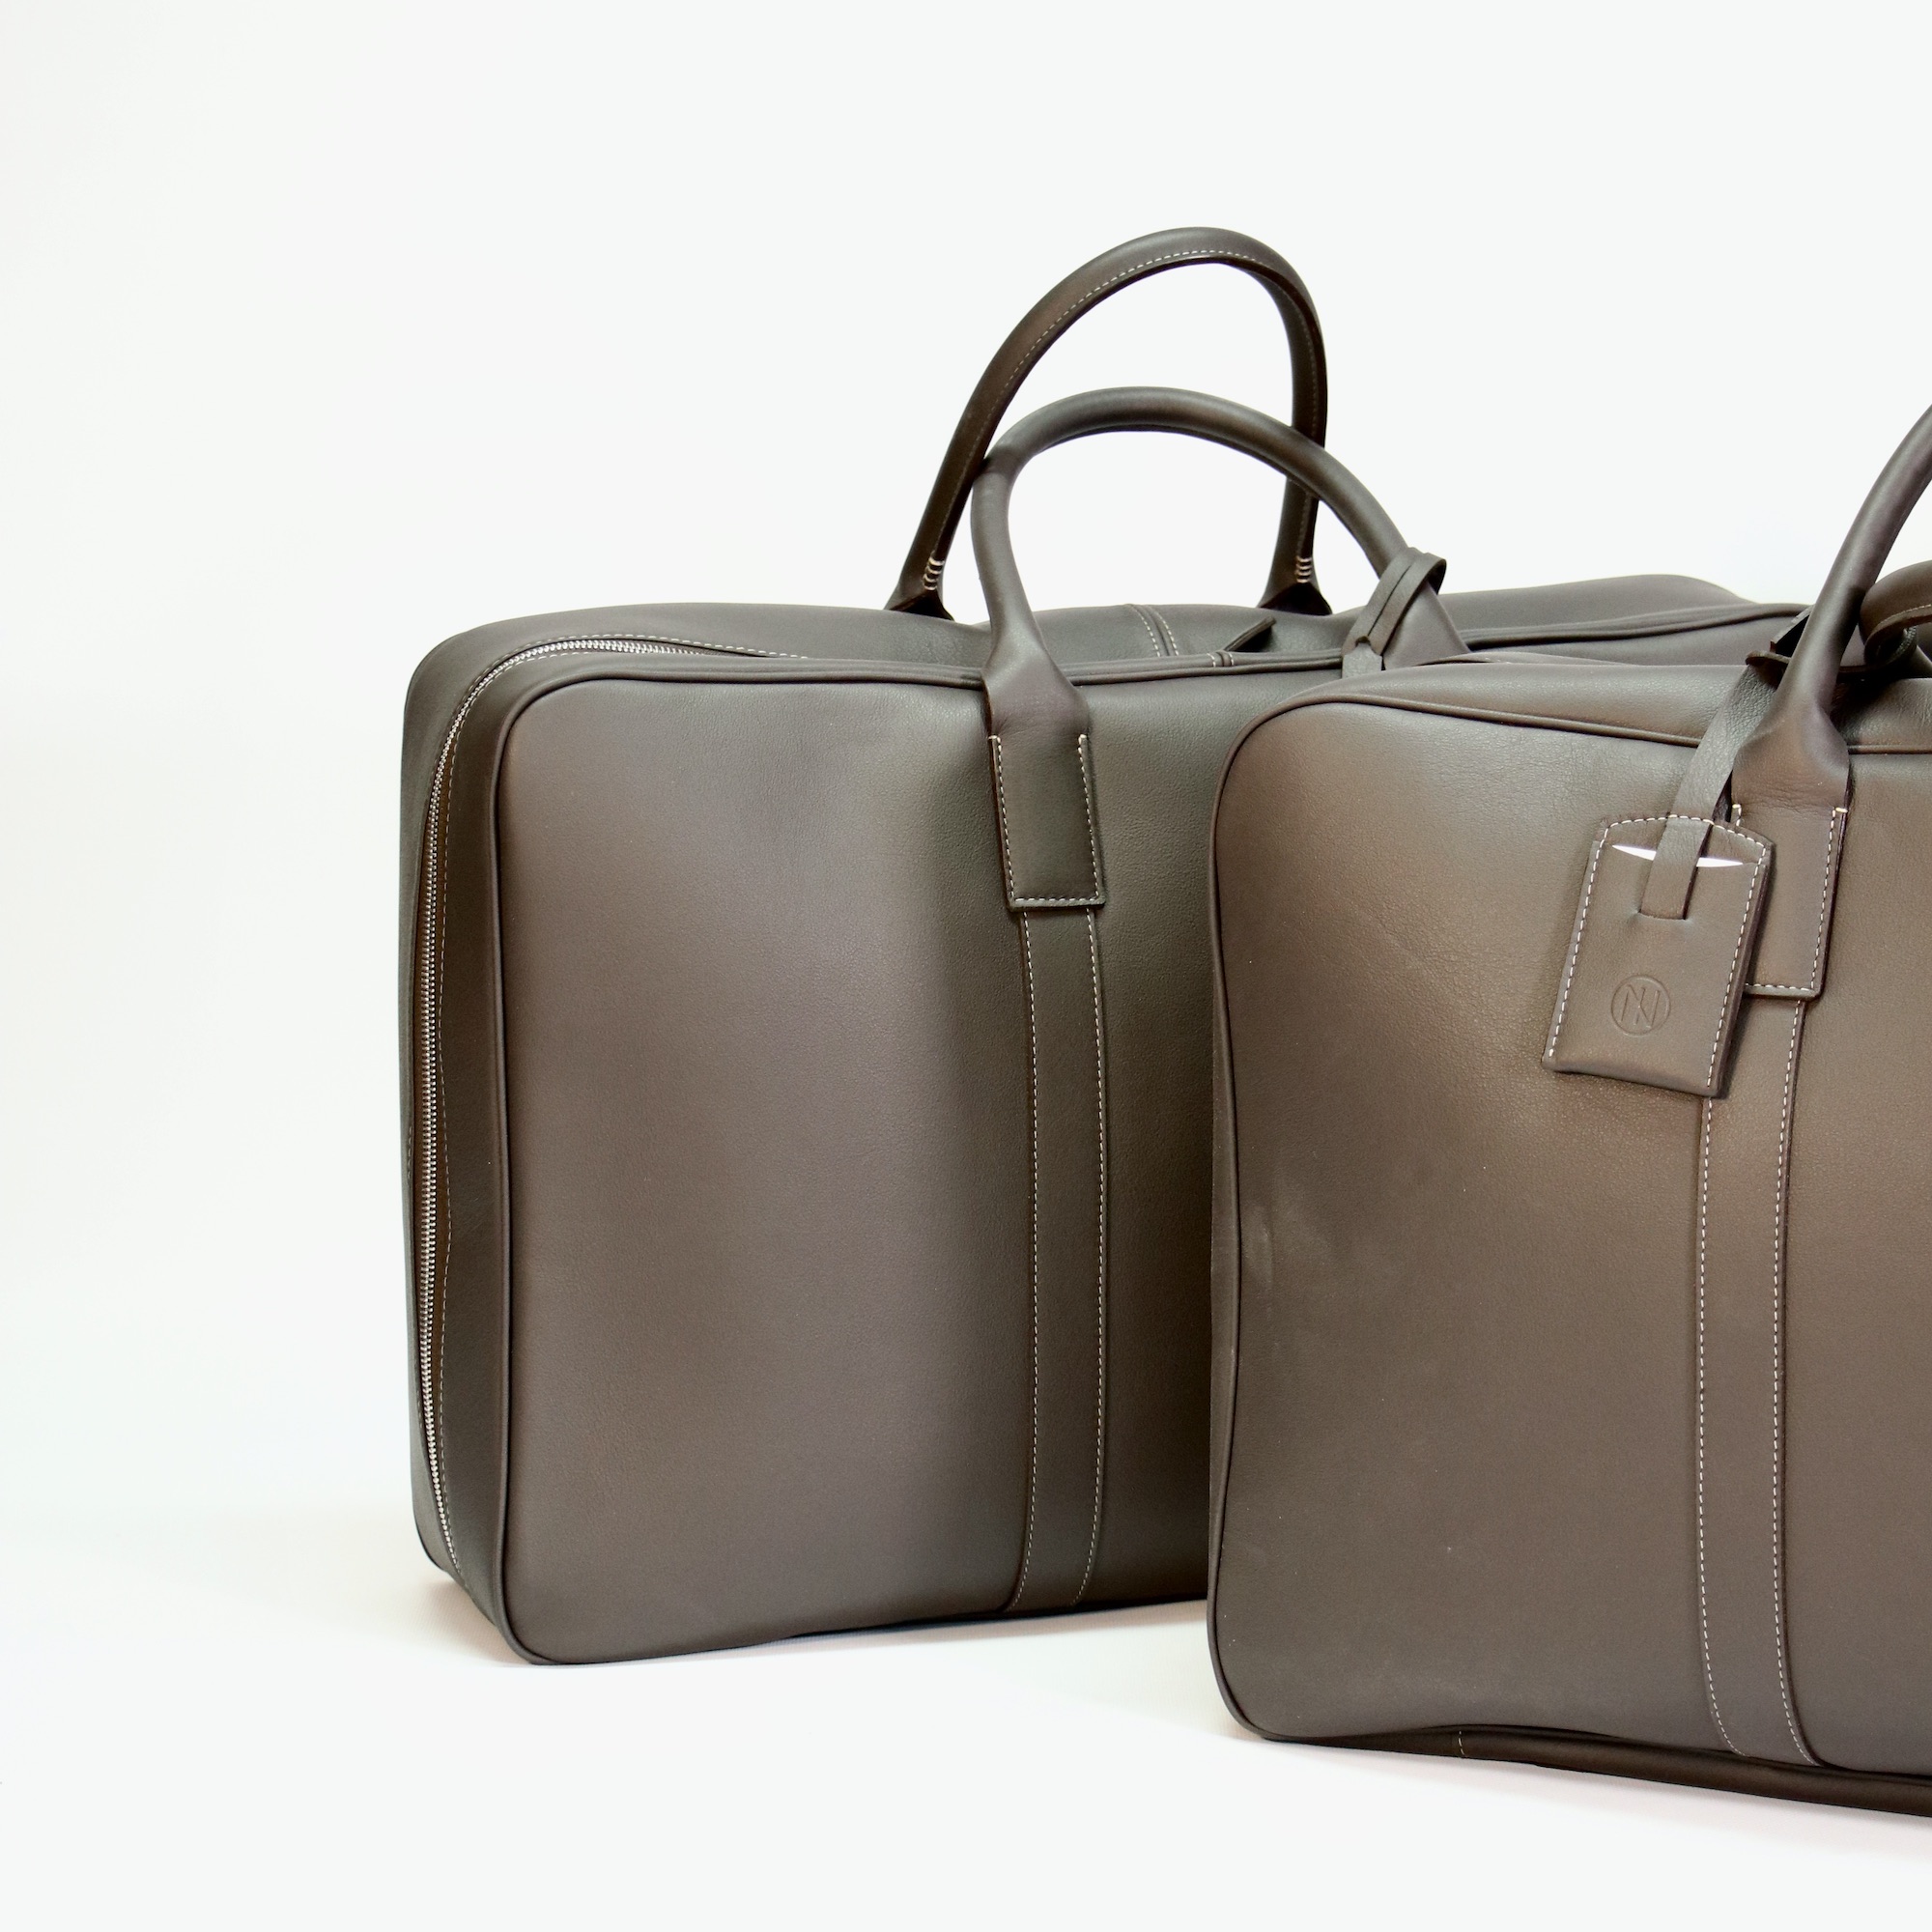 812 GTS luggage Poltrona Frau leather Ardesia SC29 Contrasting stitching Schedoni